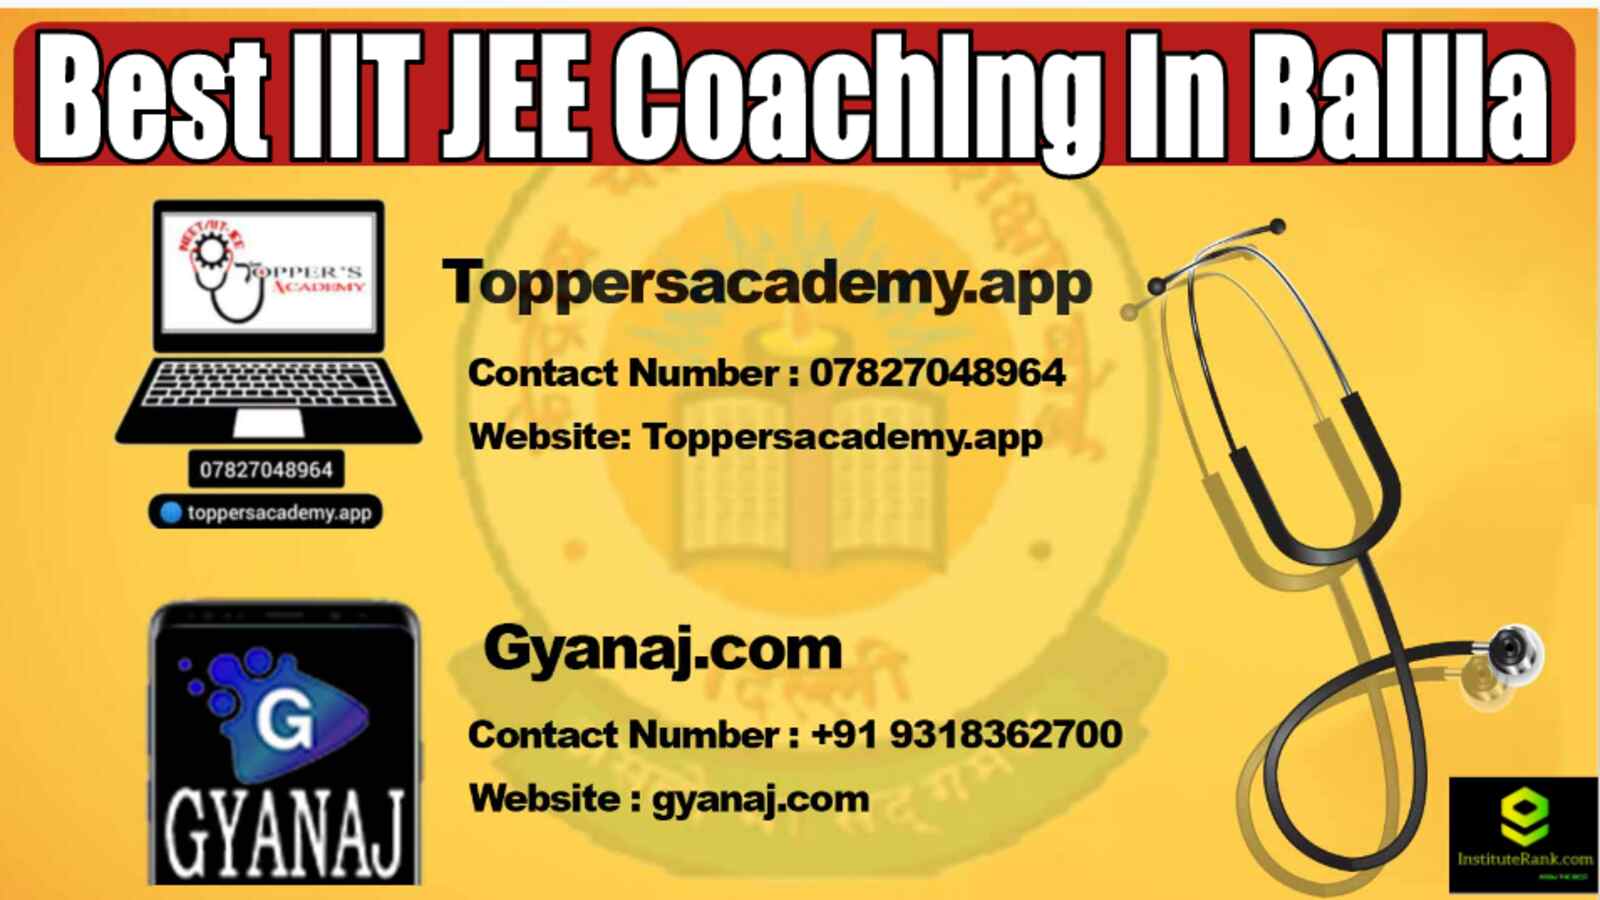 Best IIT JEE Coaching in Ballia 2022